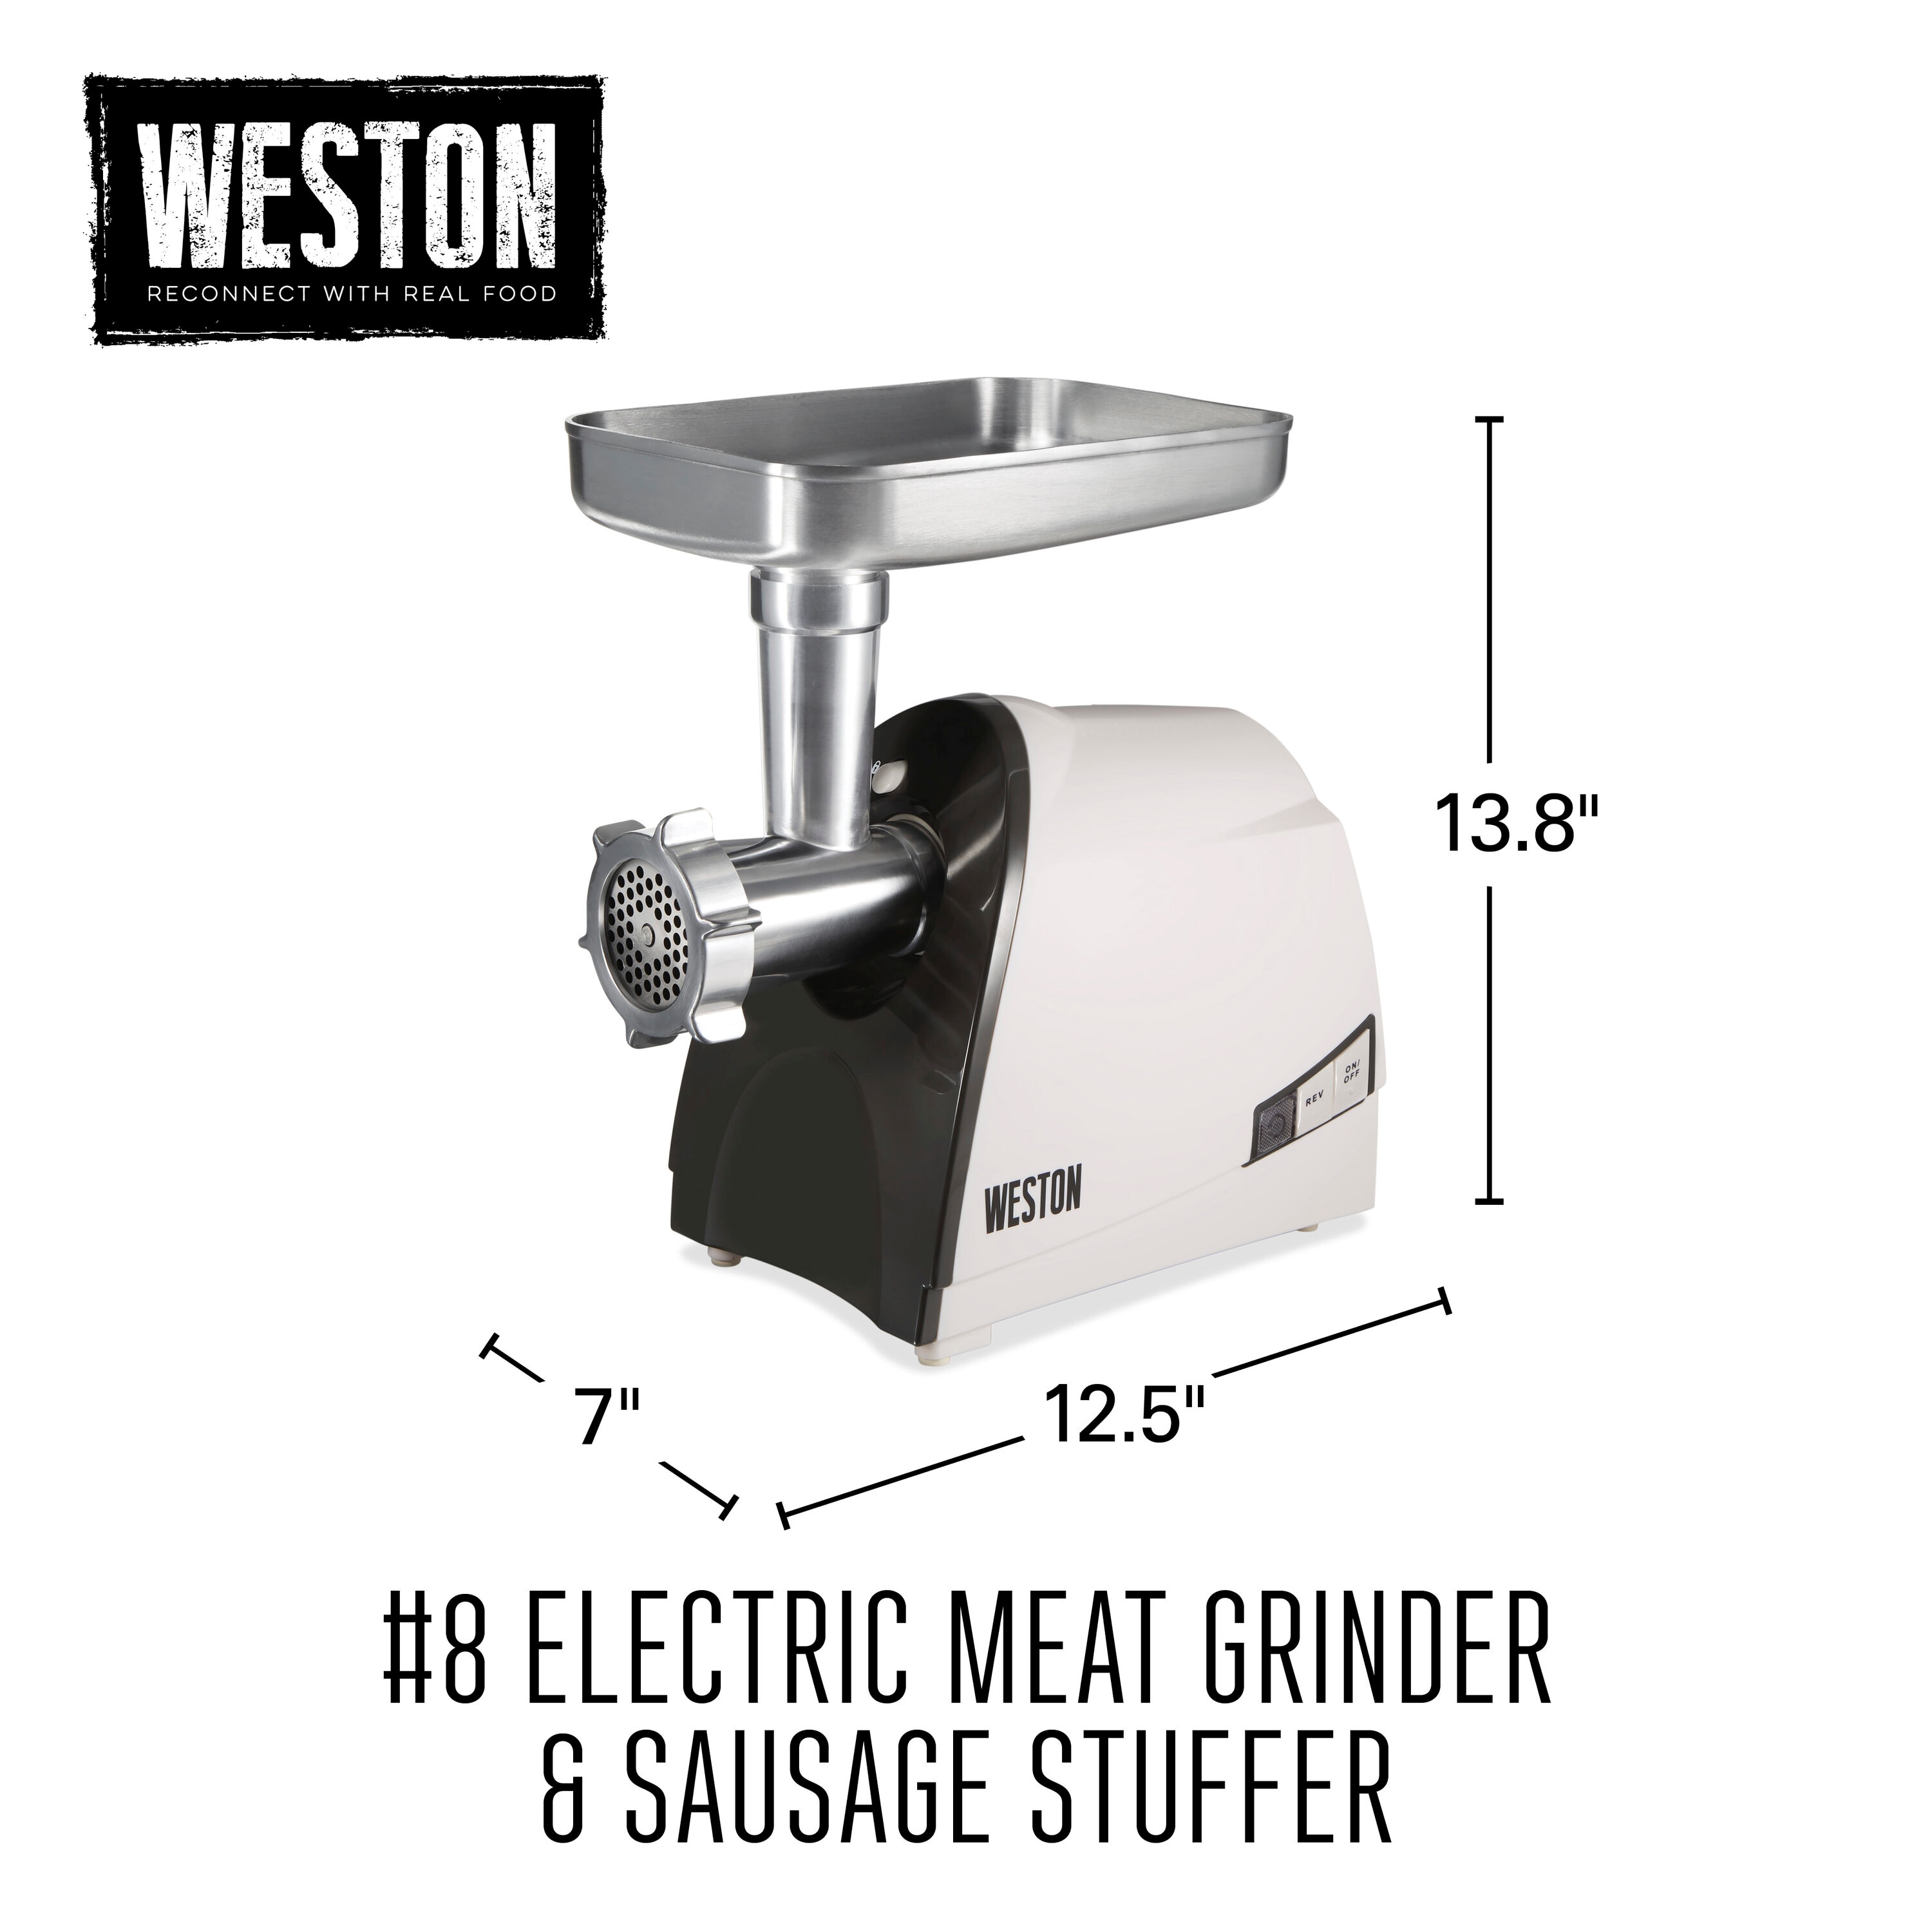 Weston Electric Meat Grinder